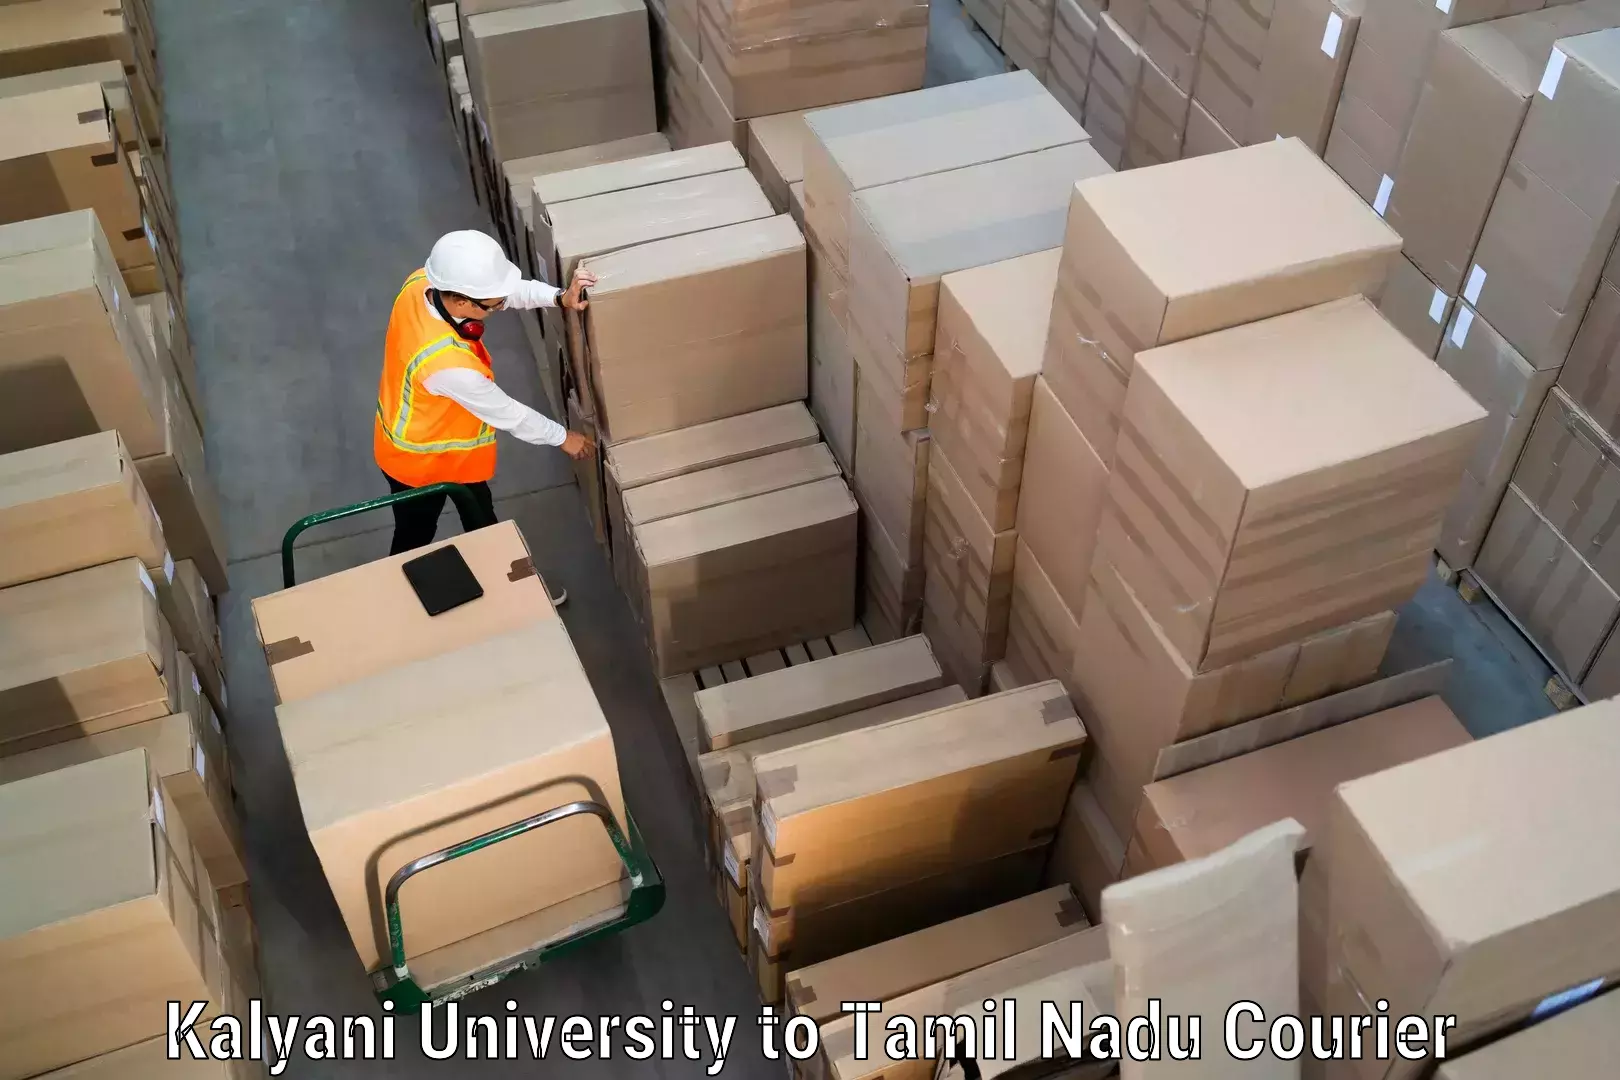 Reliable courier service Kalyani University to Tamil Nadu